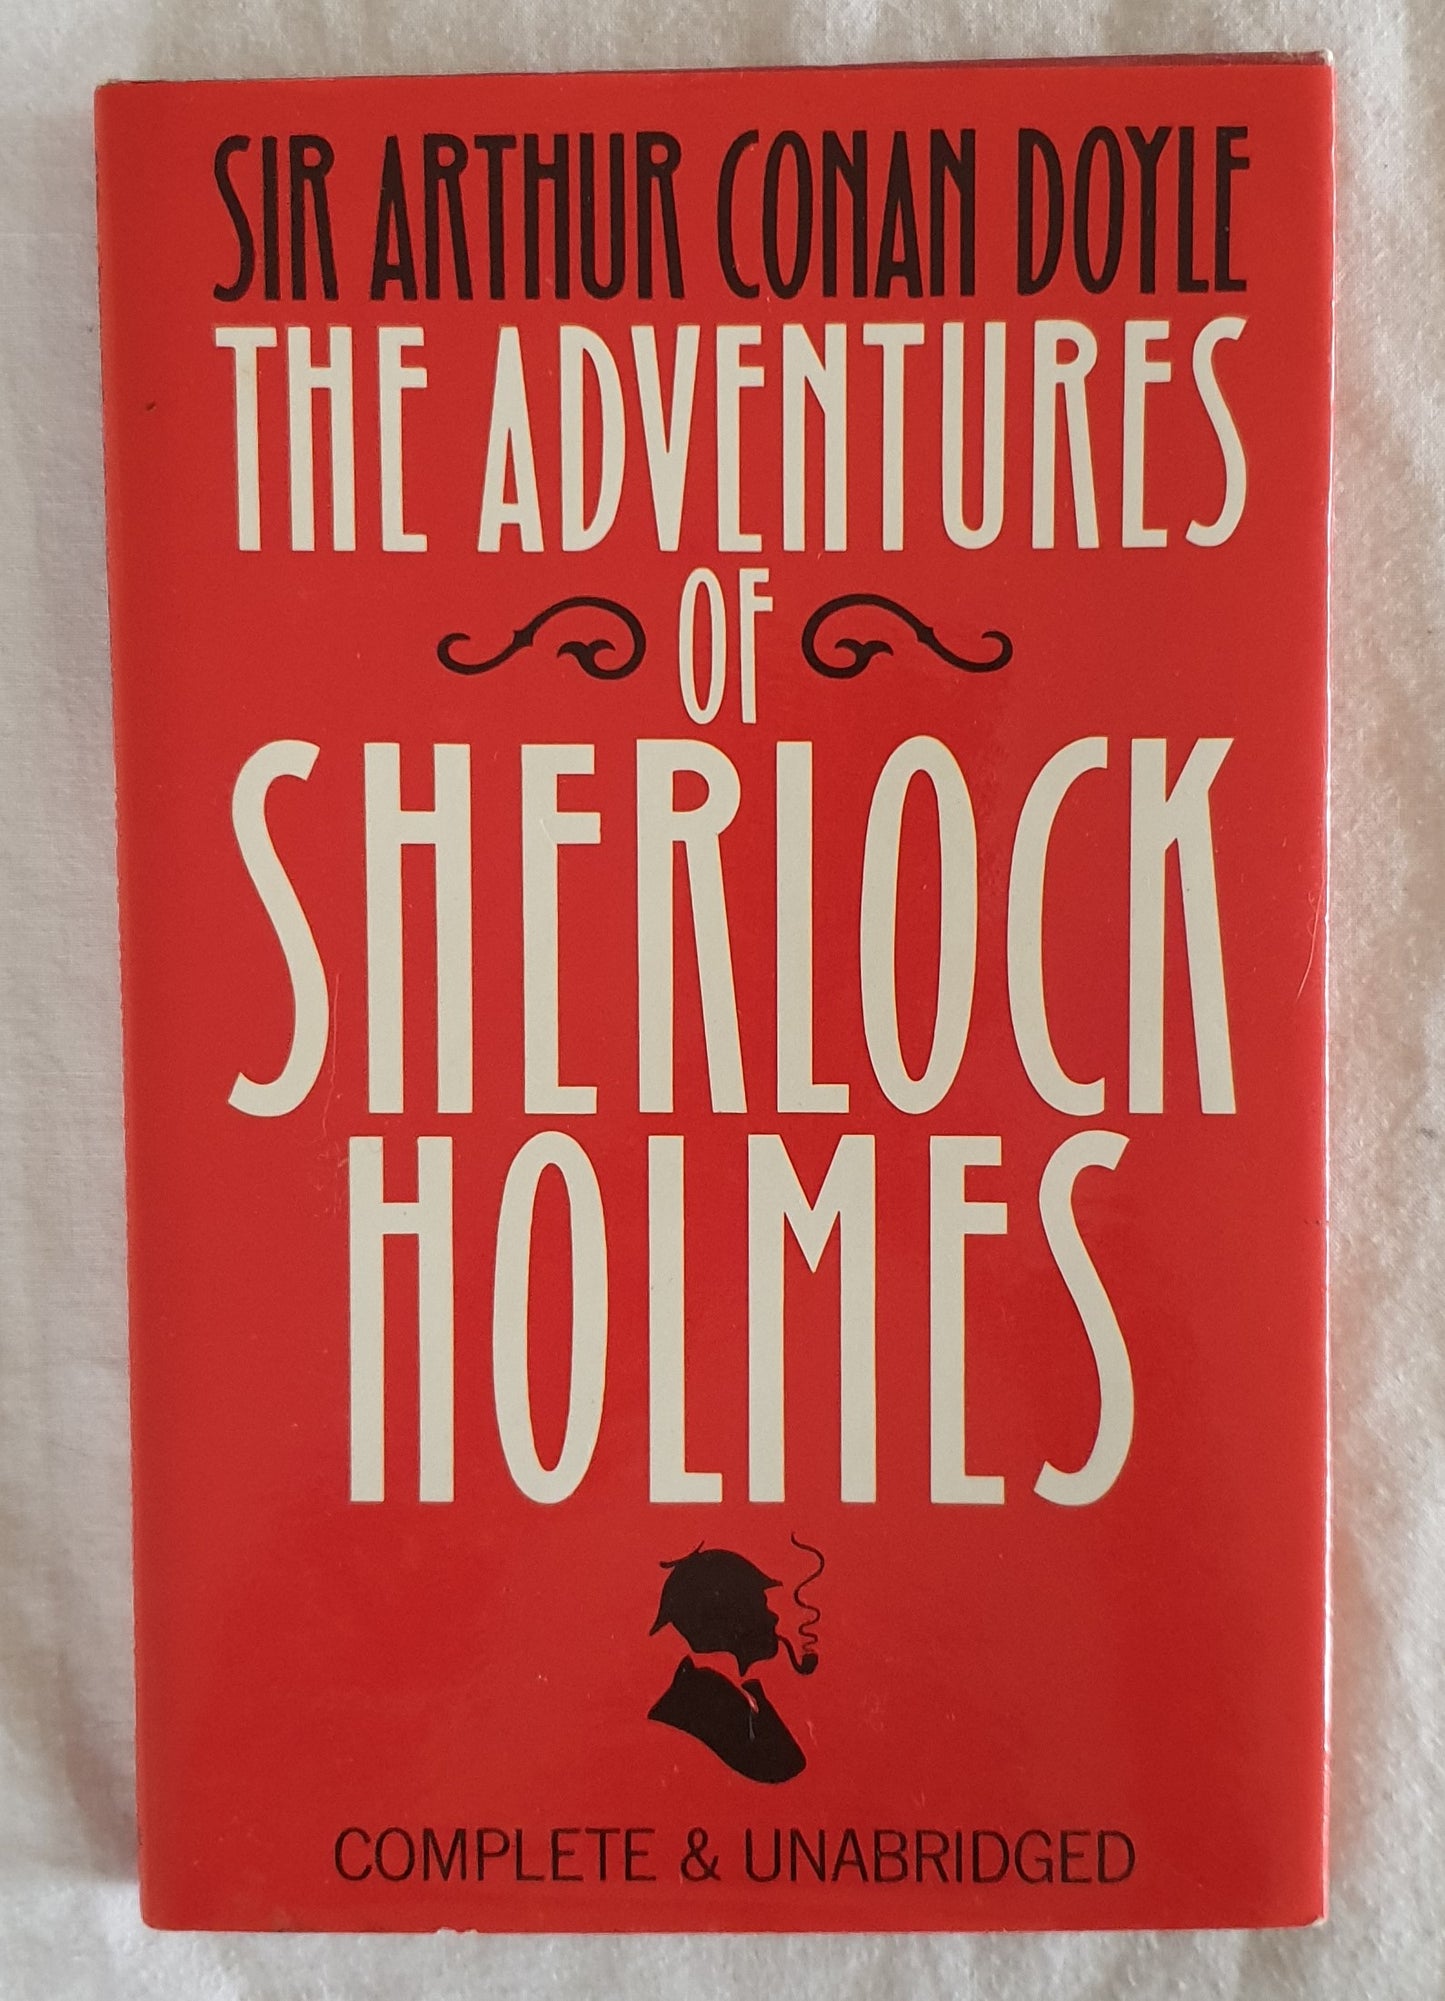 The Adventures of Sherlock Holmes  Complete & Unabridged  by Sir Arthur Conan Doyle